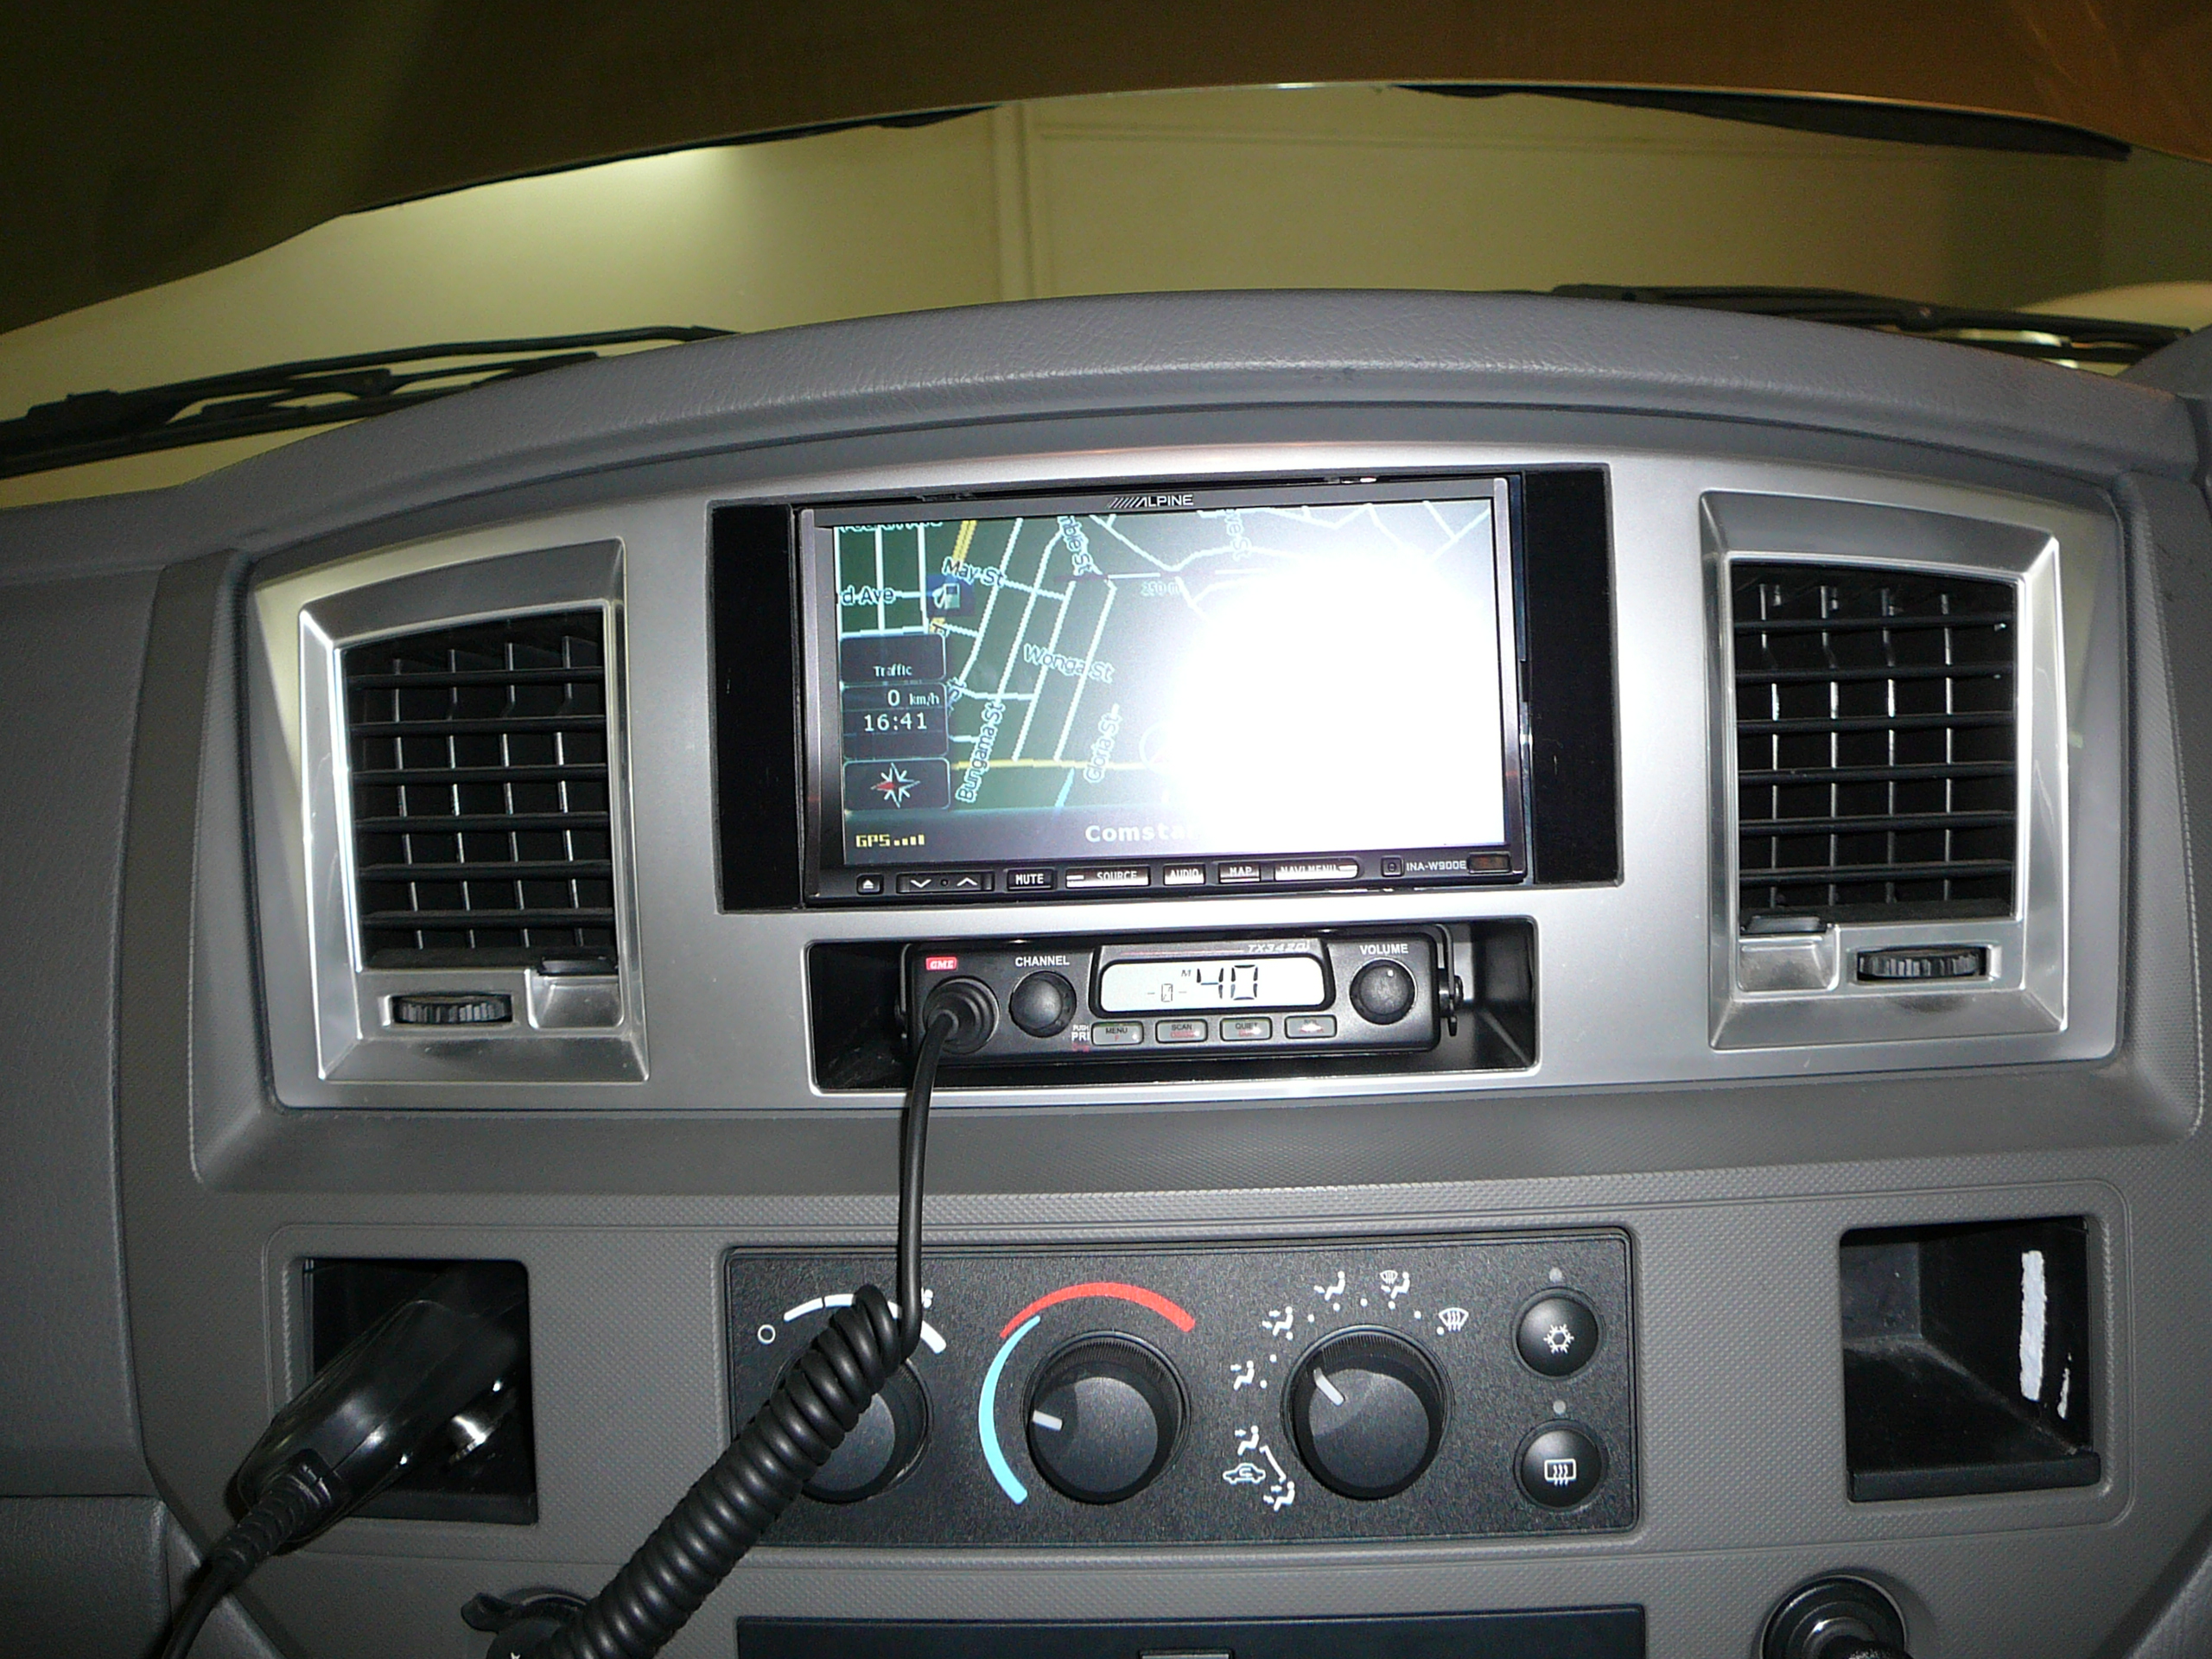 Dodge Ram 2007, GPS Navigation, Uhf system, Reverse Camera